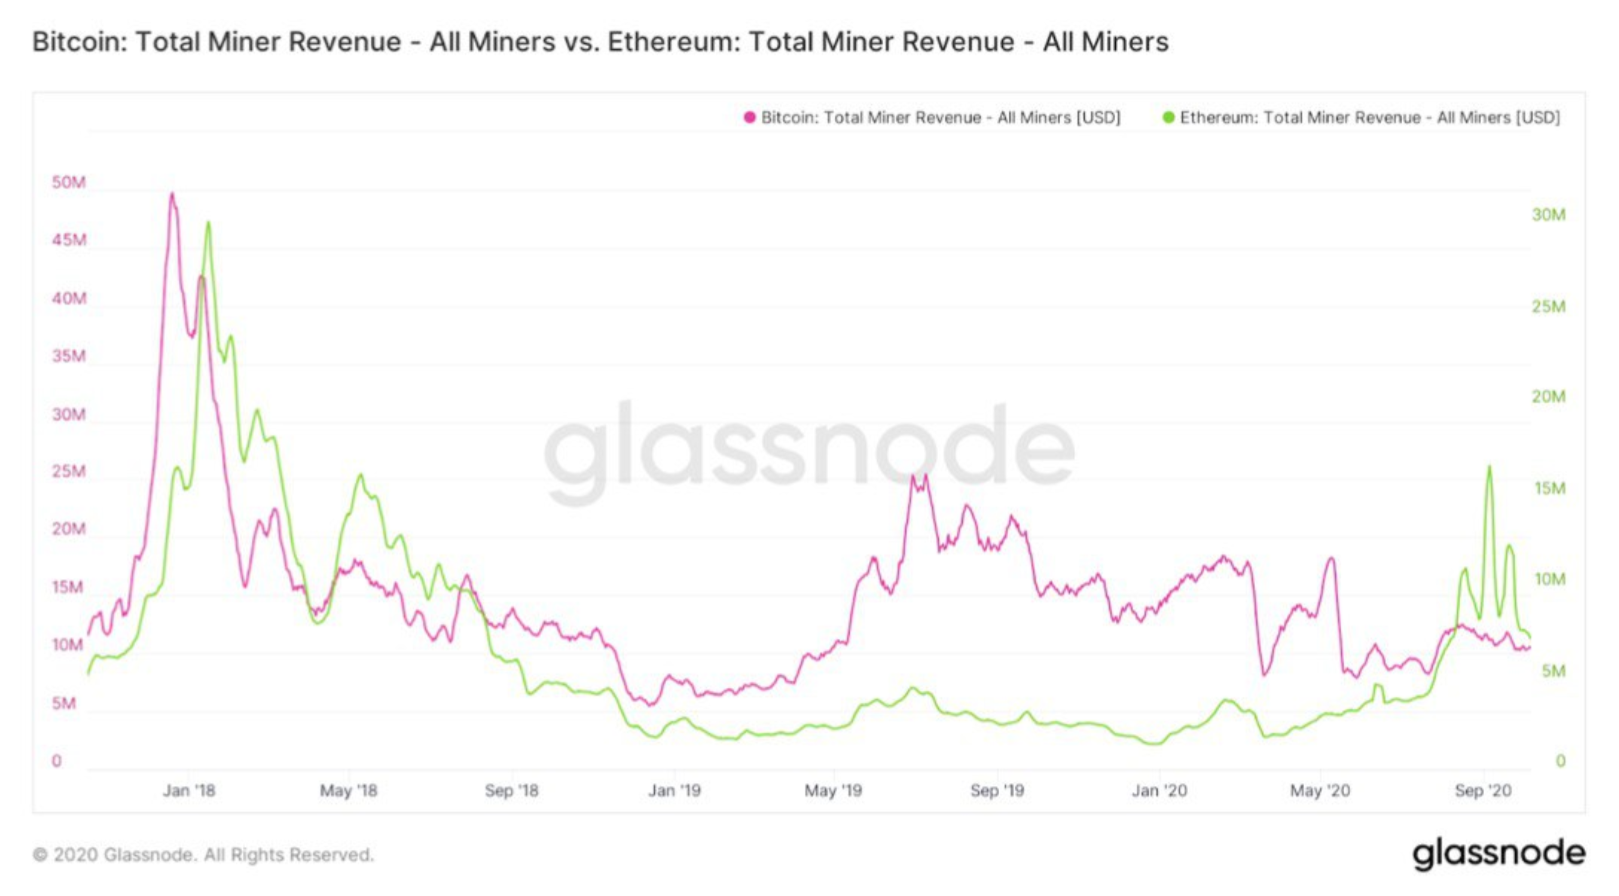 Bitcoin vs Ether - All Miner Revenue. Source: glassnode